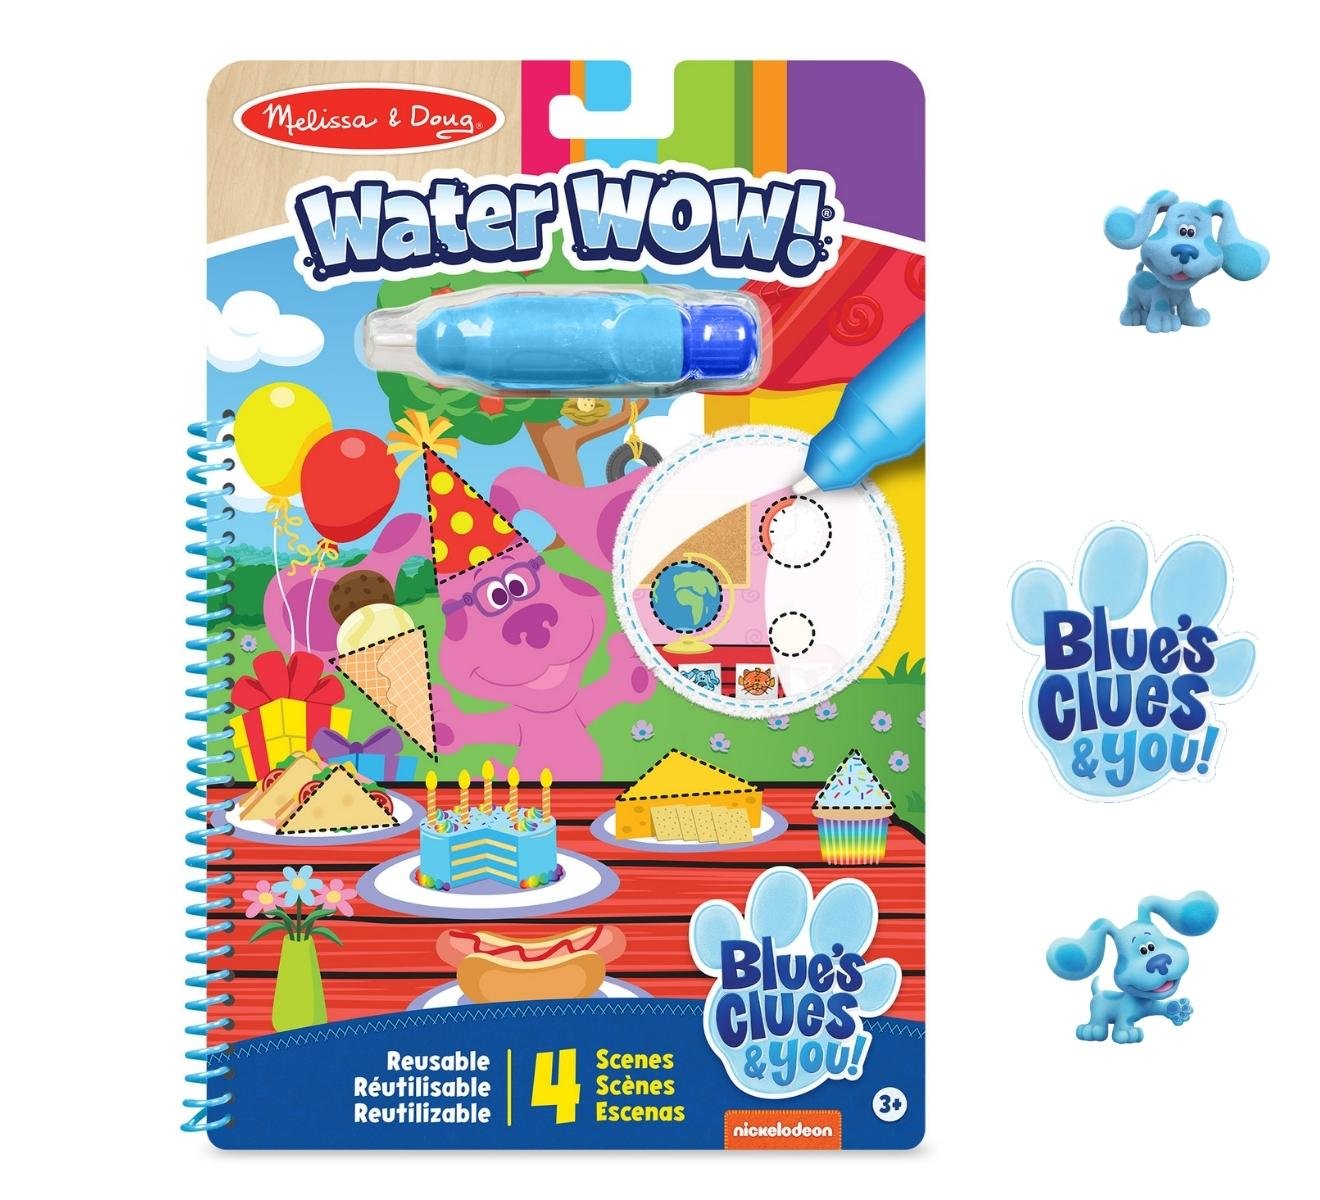 [New!! ระบายน้ำ+รียูส Blues] รุ่น 33002 ระบายสีน้ำ Blue's Clues & You! Water Wow รุ่น Shapes รีวิวดีใน Amazon USA ฝึกการออกแบบตกแต่ง เสริมสร้างจินตนาการ ไม่เหมือนใคร